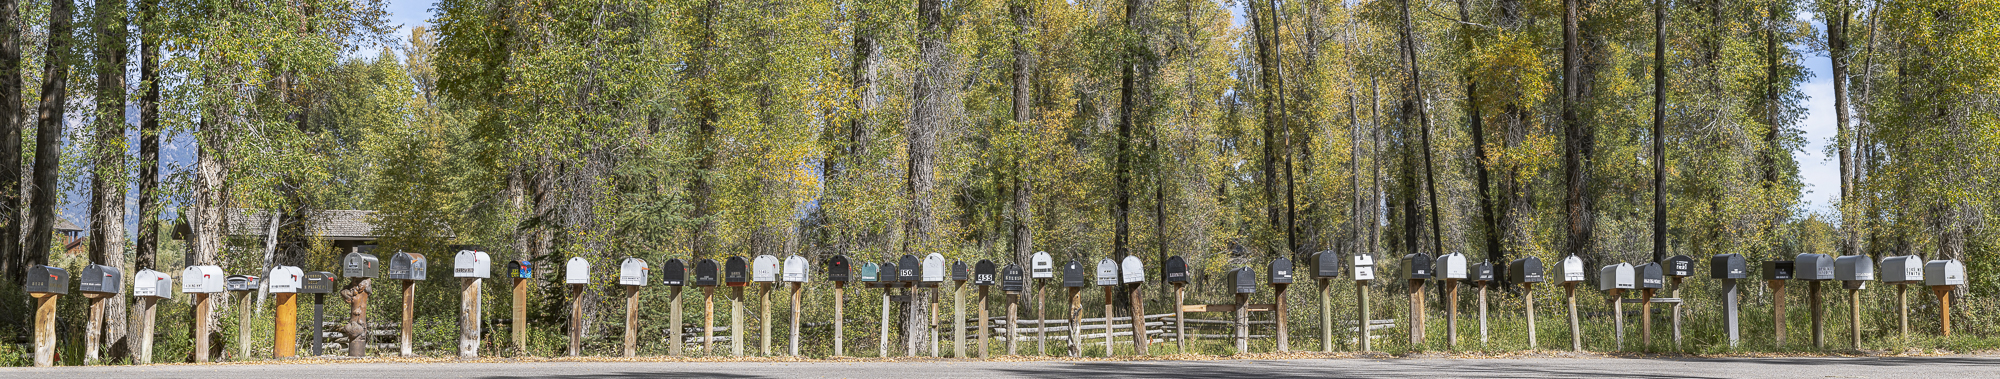 Ganged Mailboxes at Jackson Hole Golf Resort